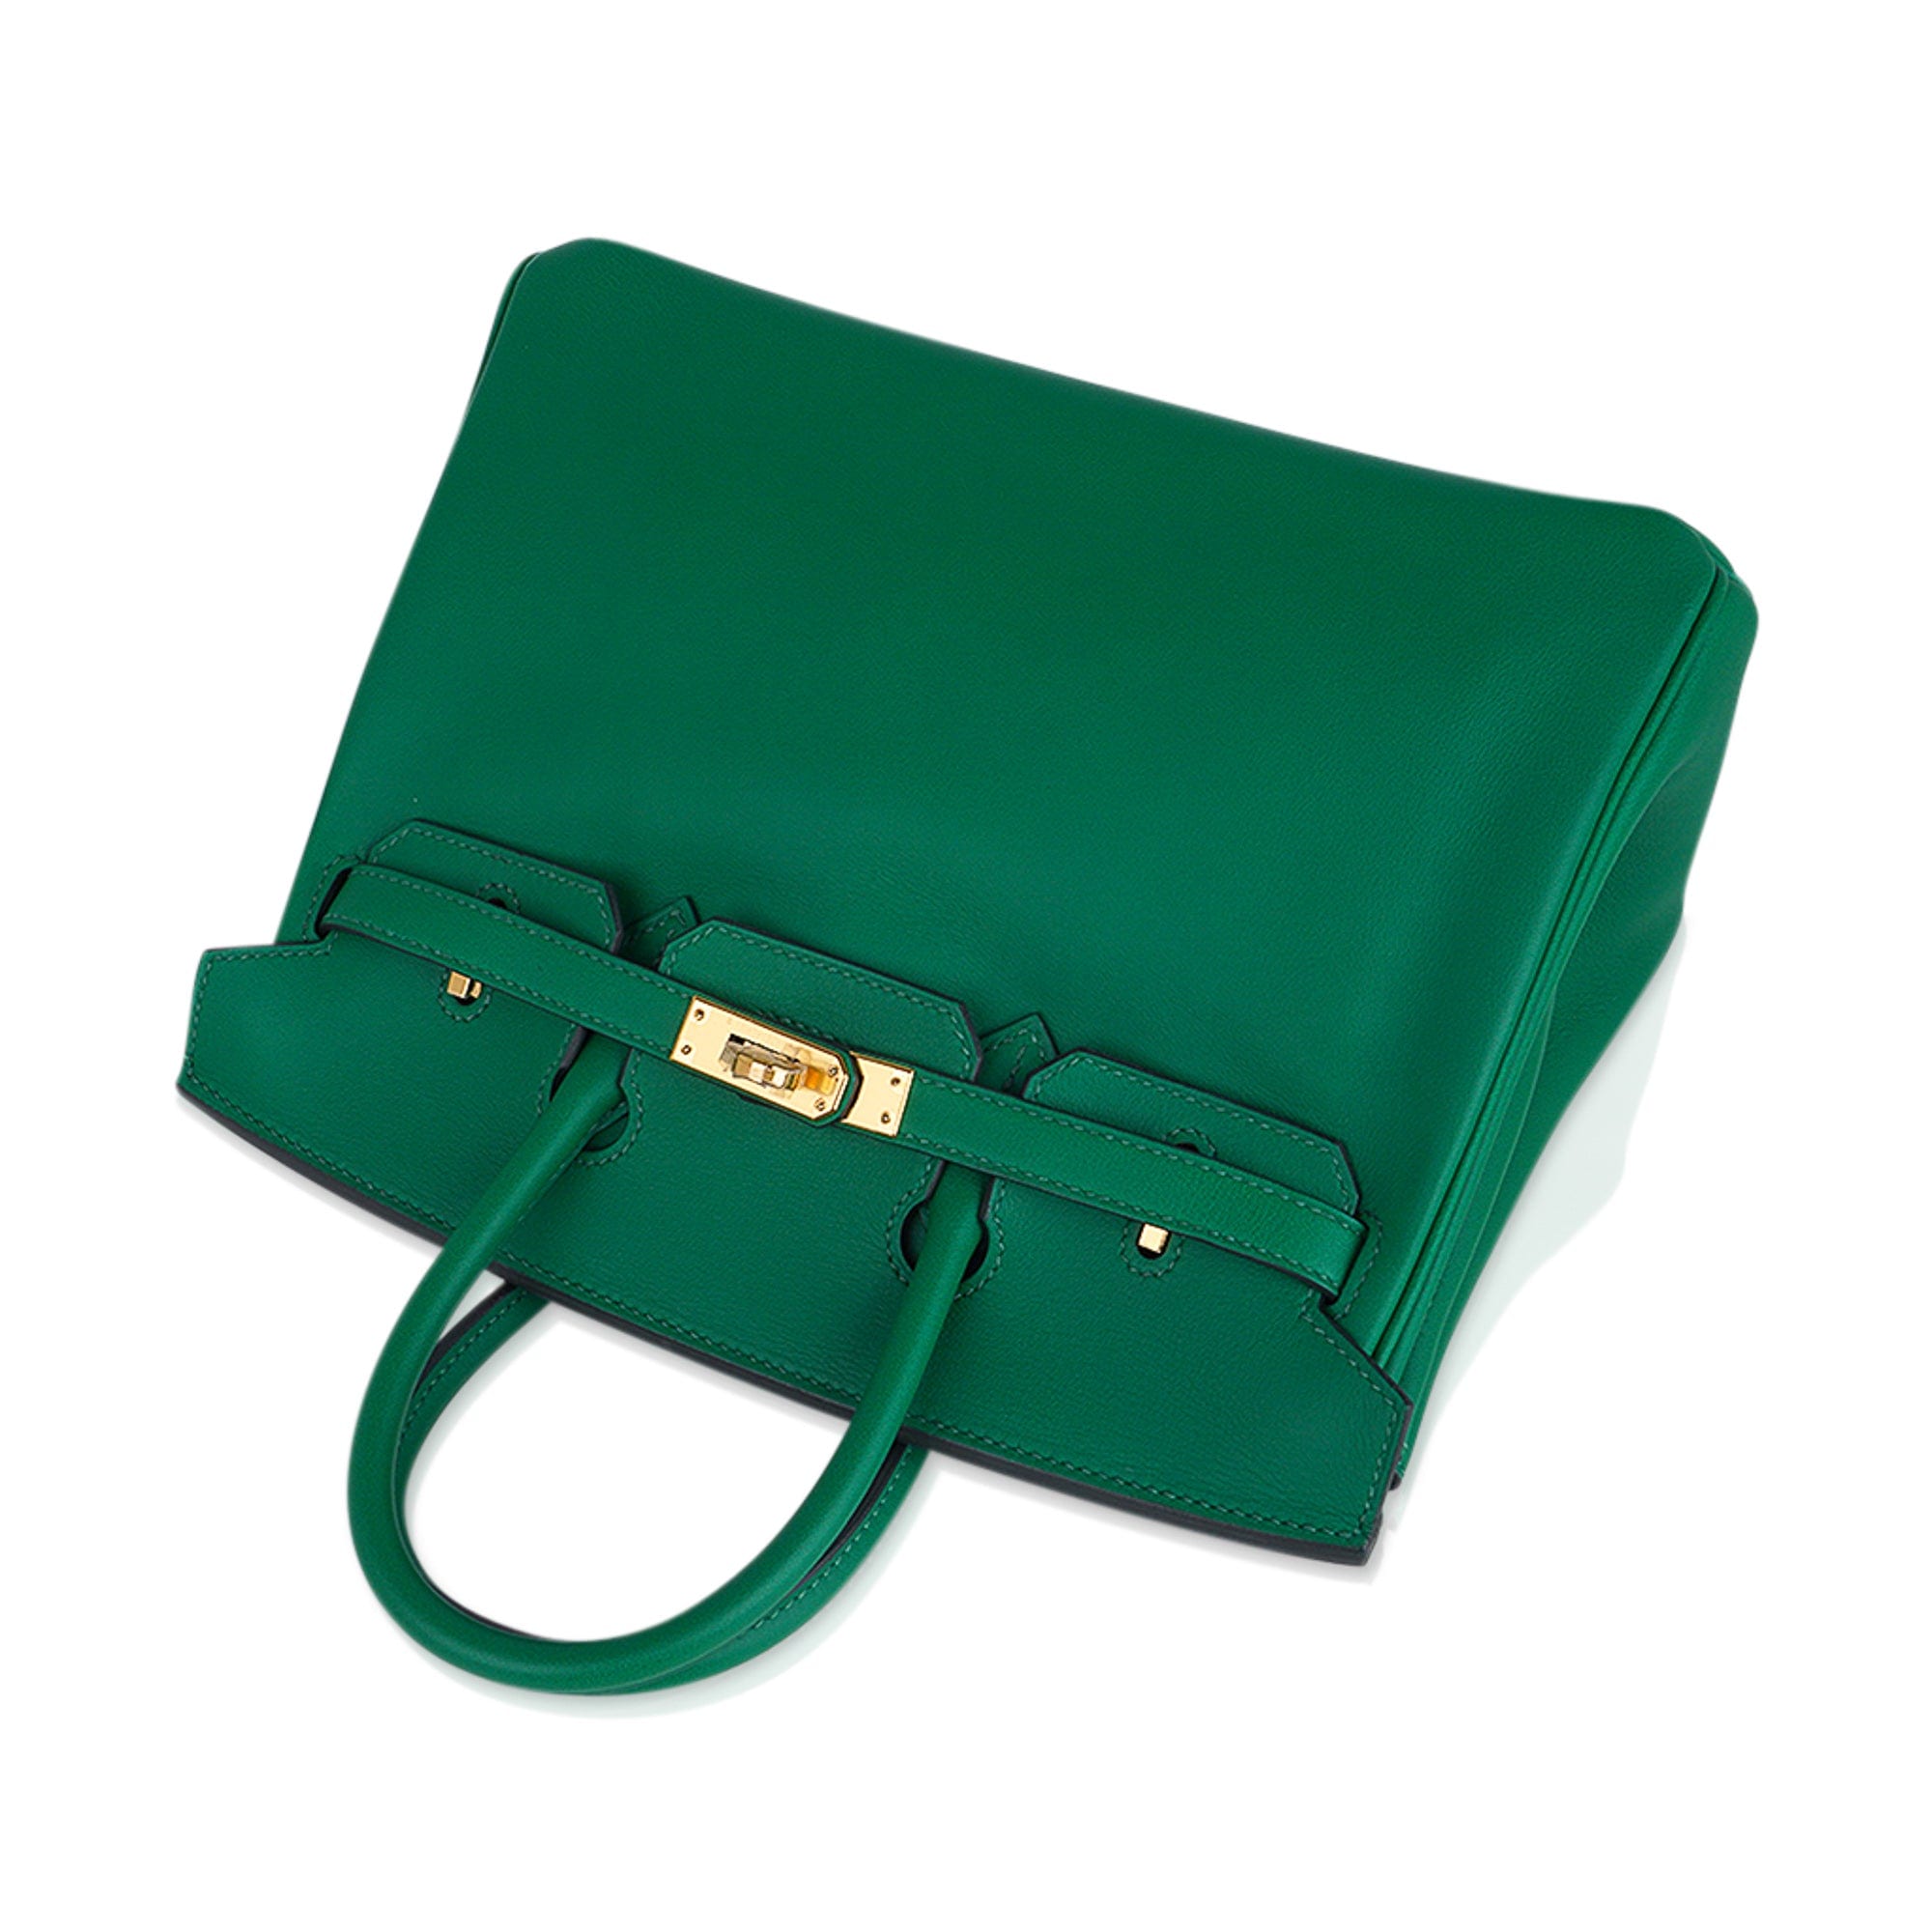 Hermès - Hermès Birkin 25 Swift Leather Handbag-Vert Fonce Gold Hardware